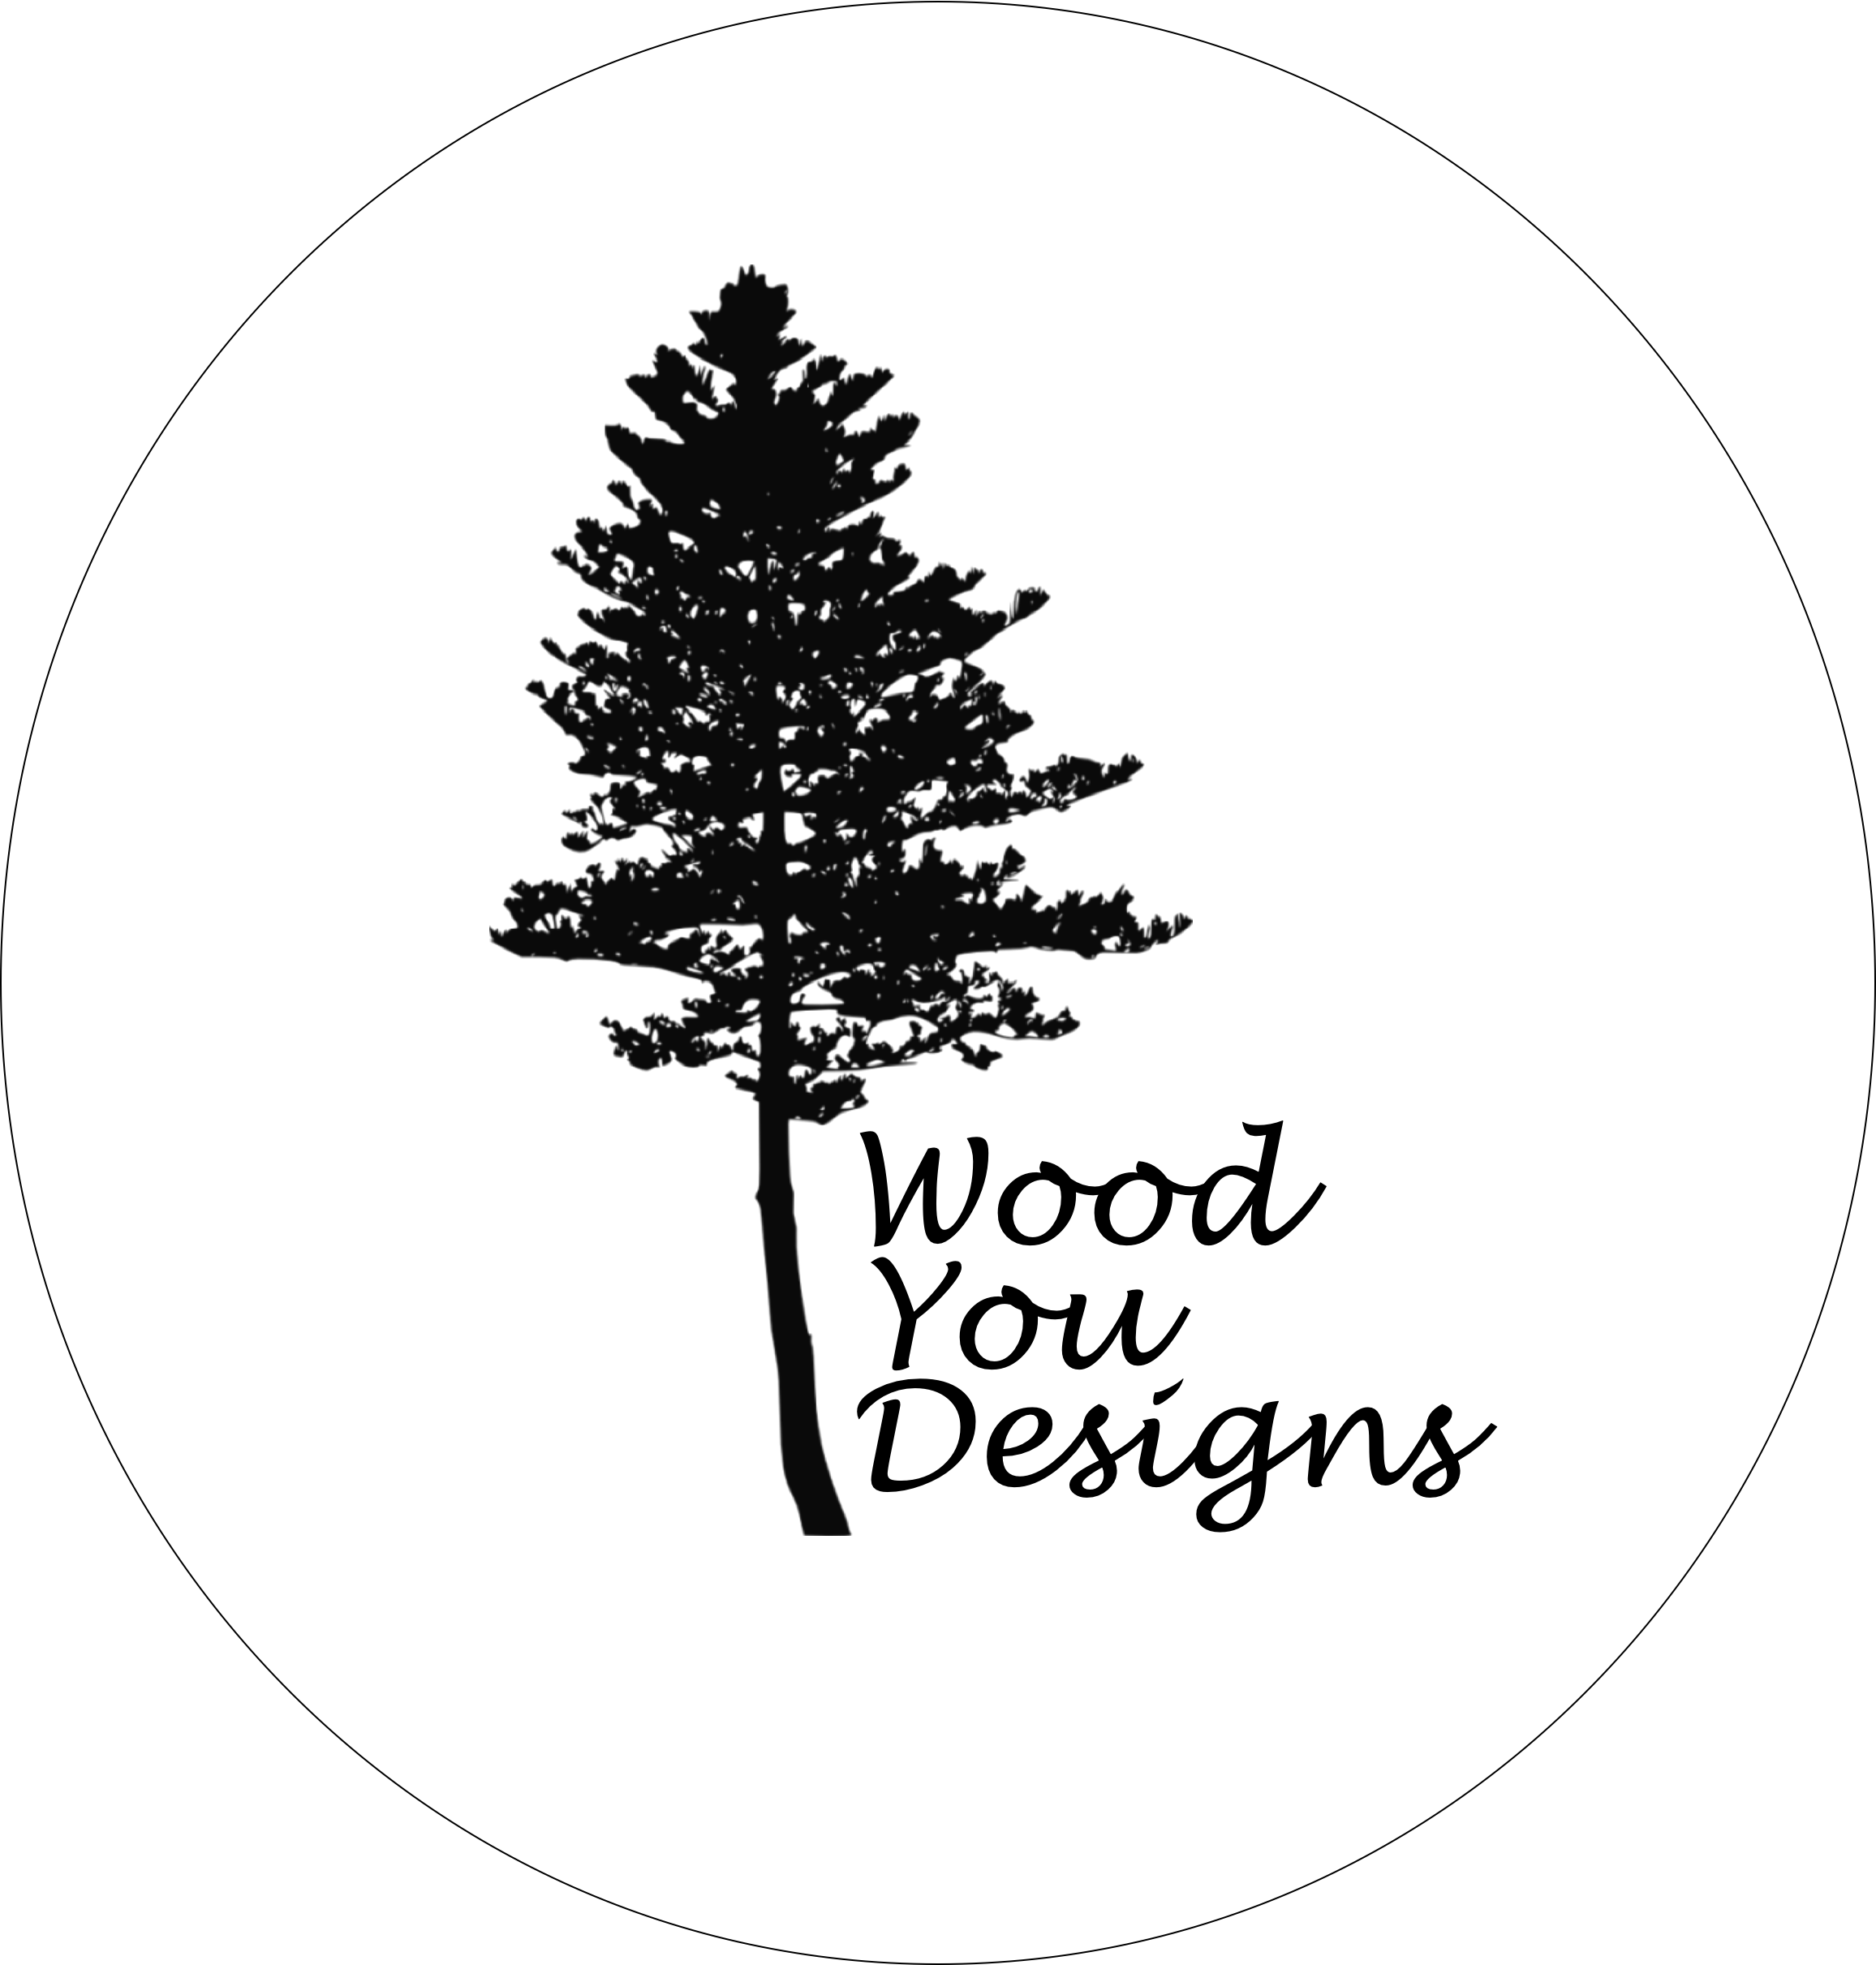 Wood You Designs